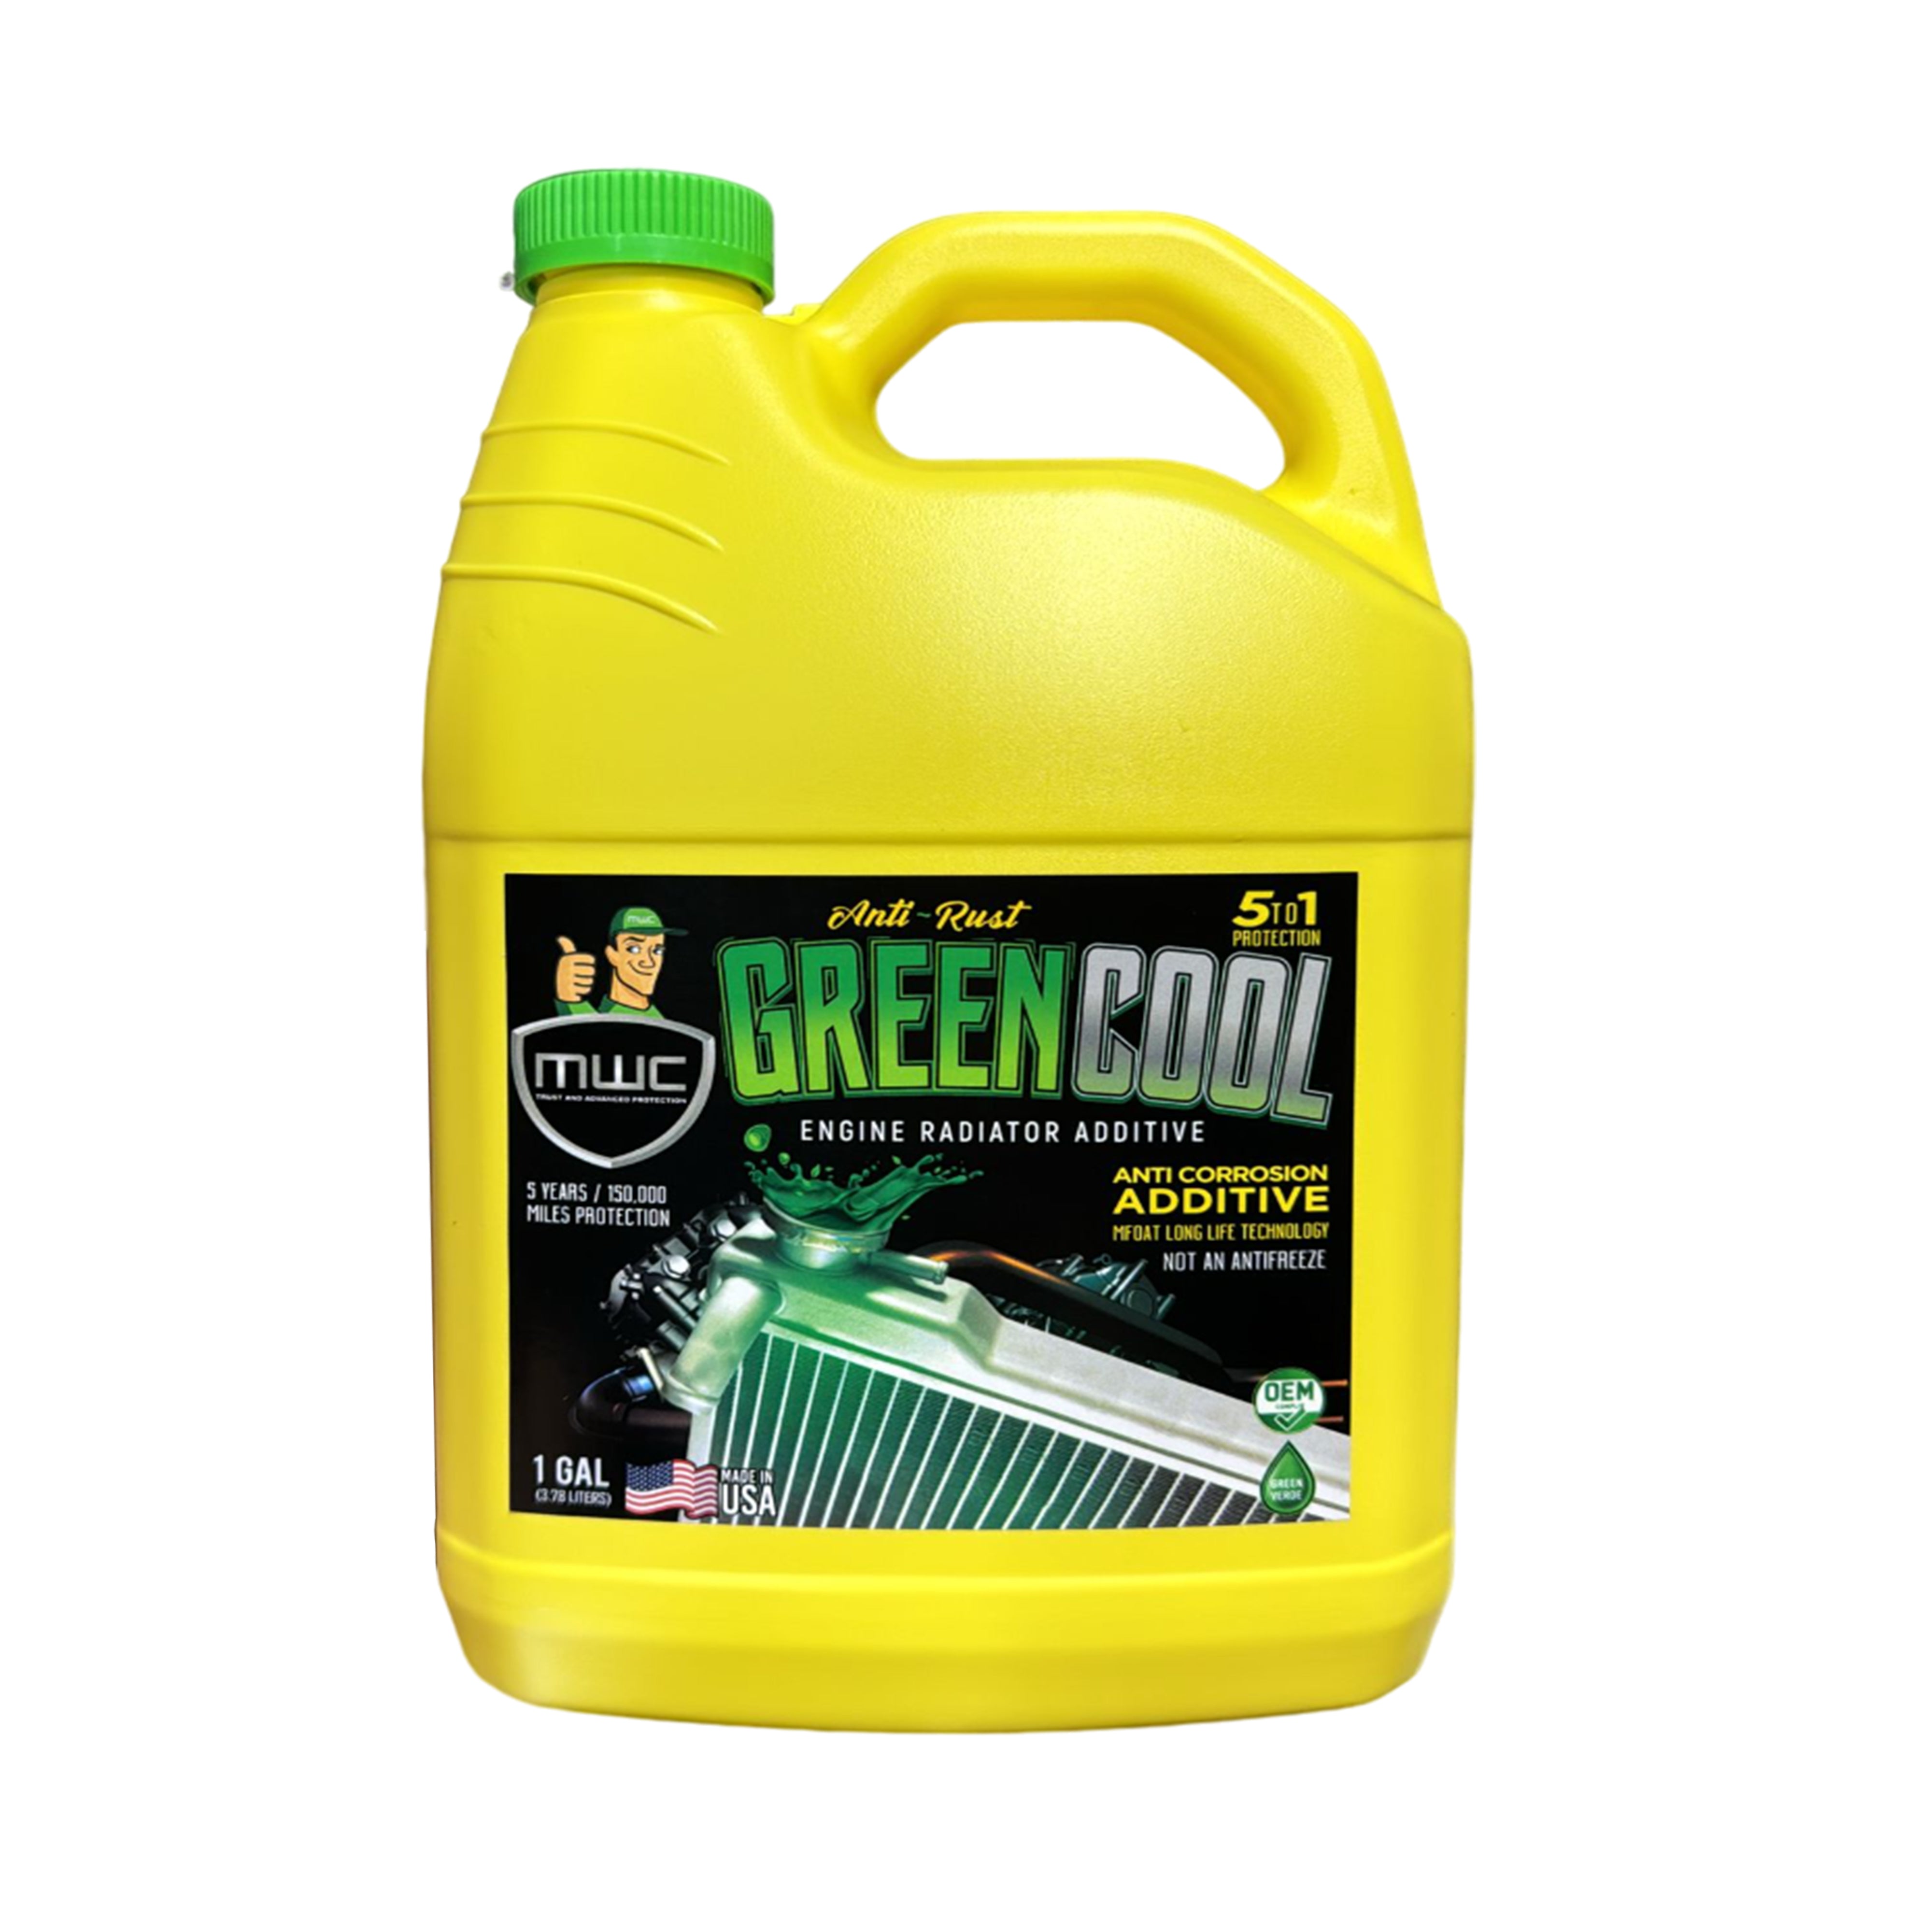 MWC Green Cool Engine Radiator Anti-Rust Additive, 1 Gallon, Corrosion Inhibitor